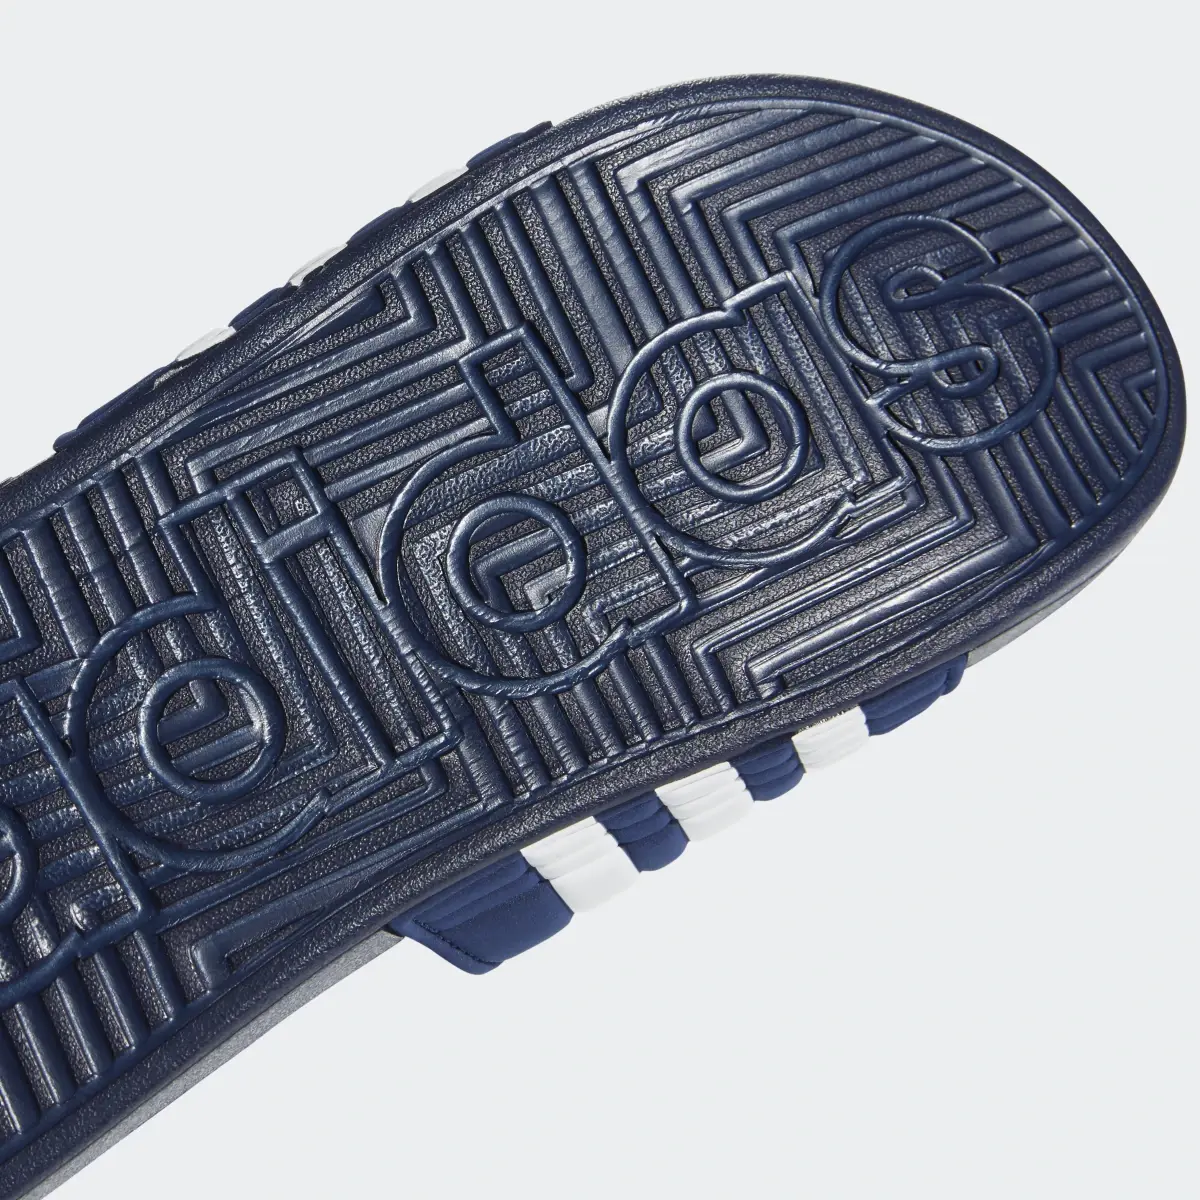 Adidas Adissage Slides. 3